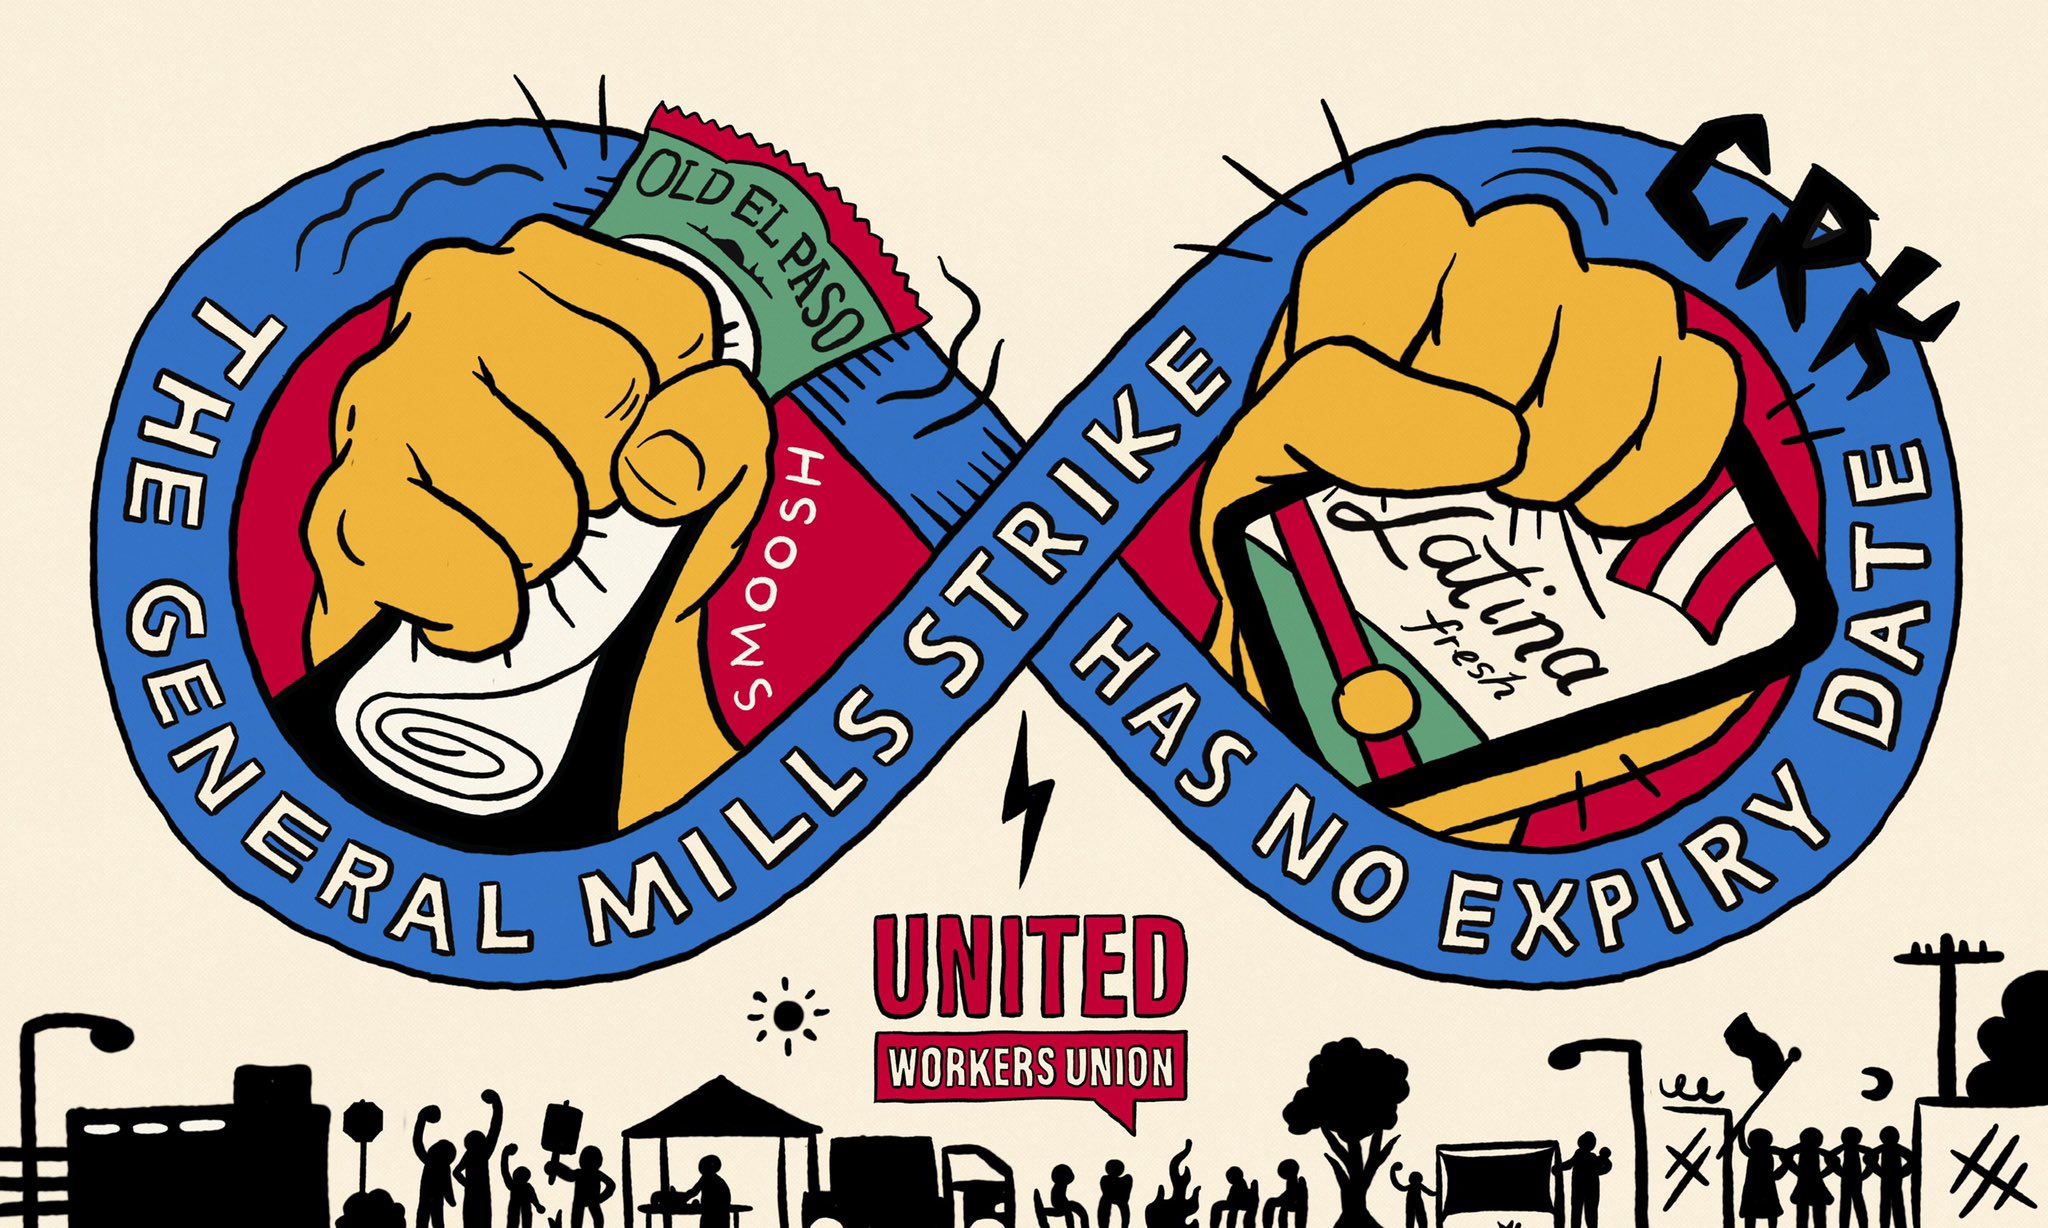 General Mills Strike image by Sam Wallman